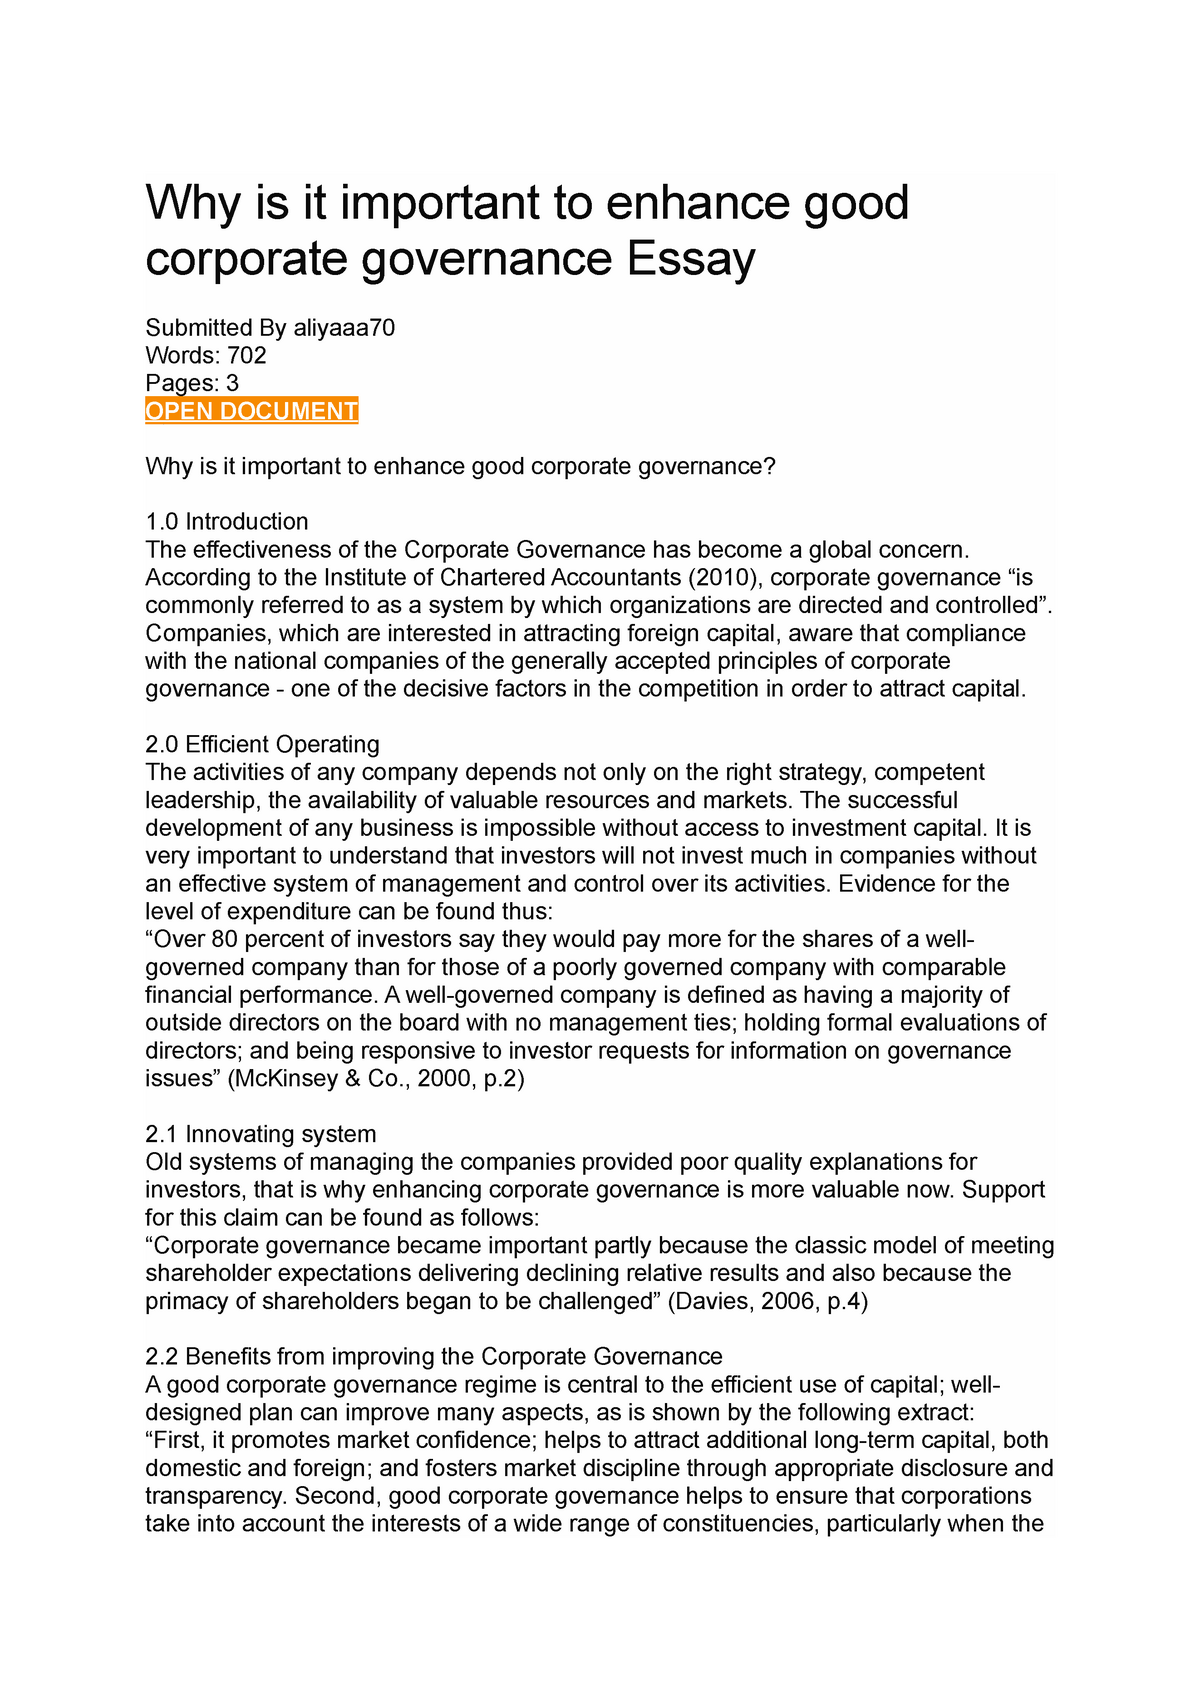 corporate governance essay upsc